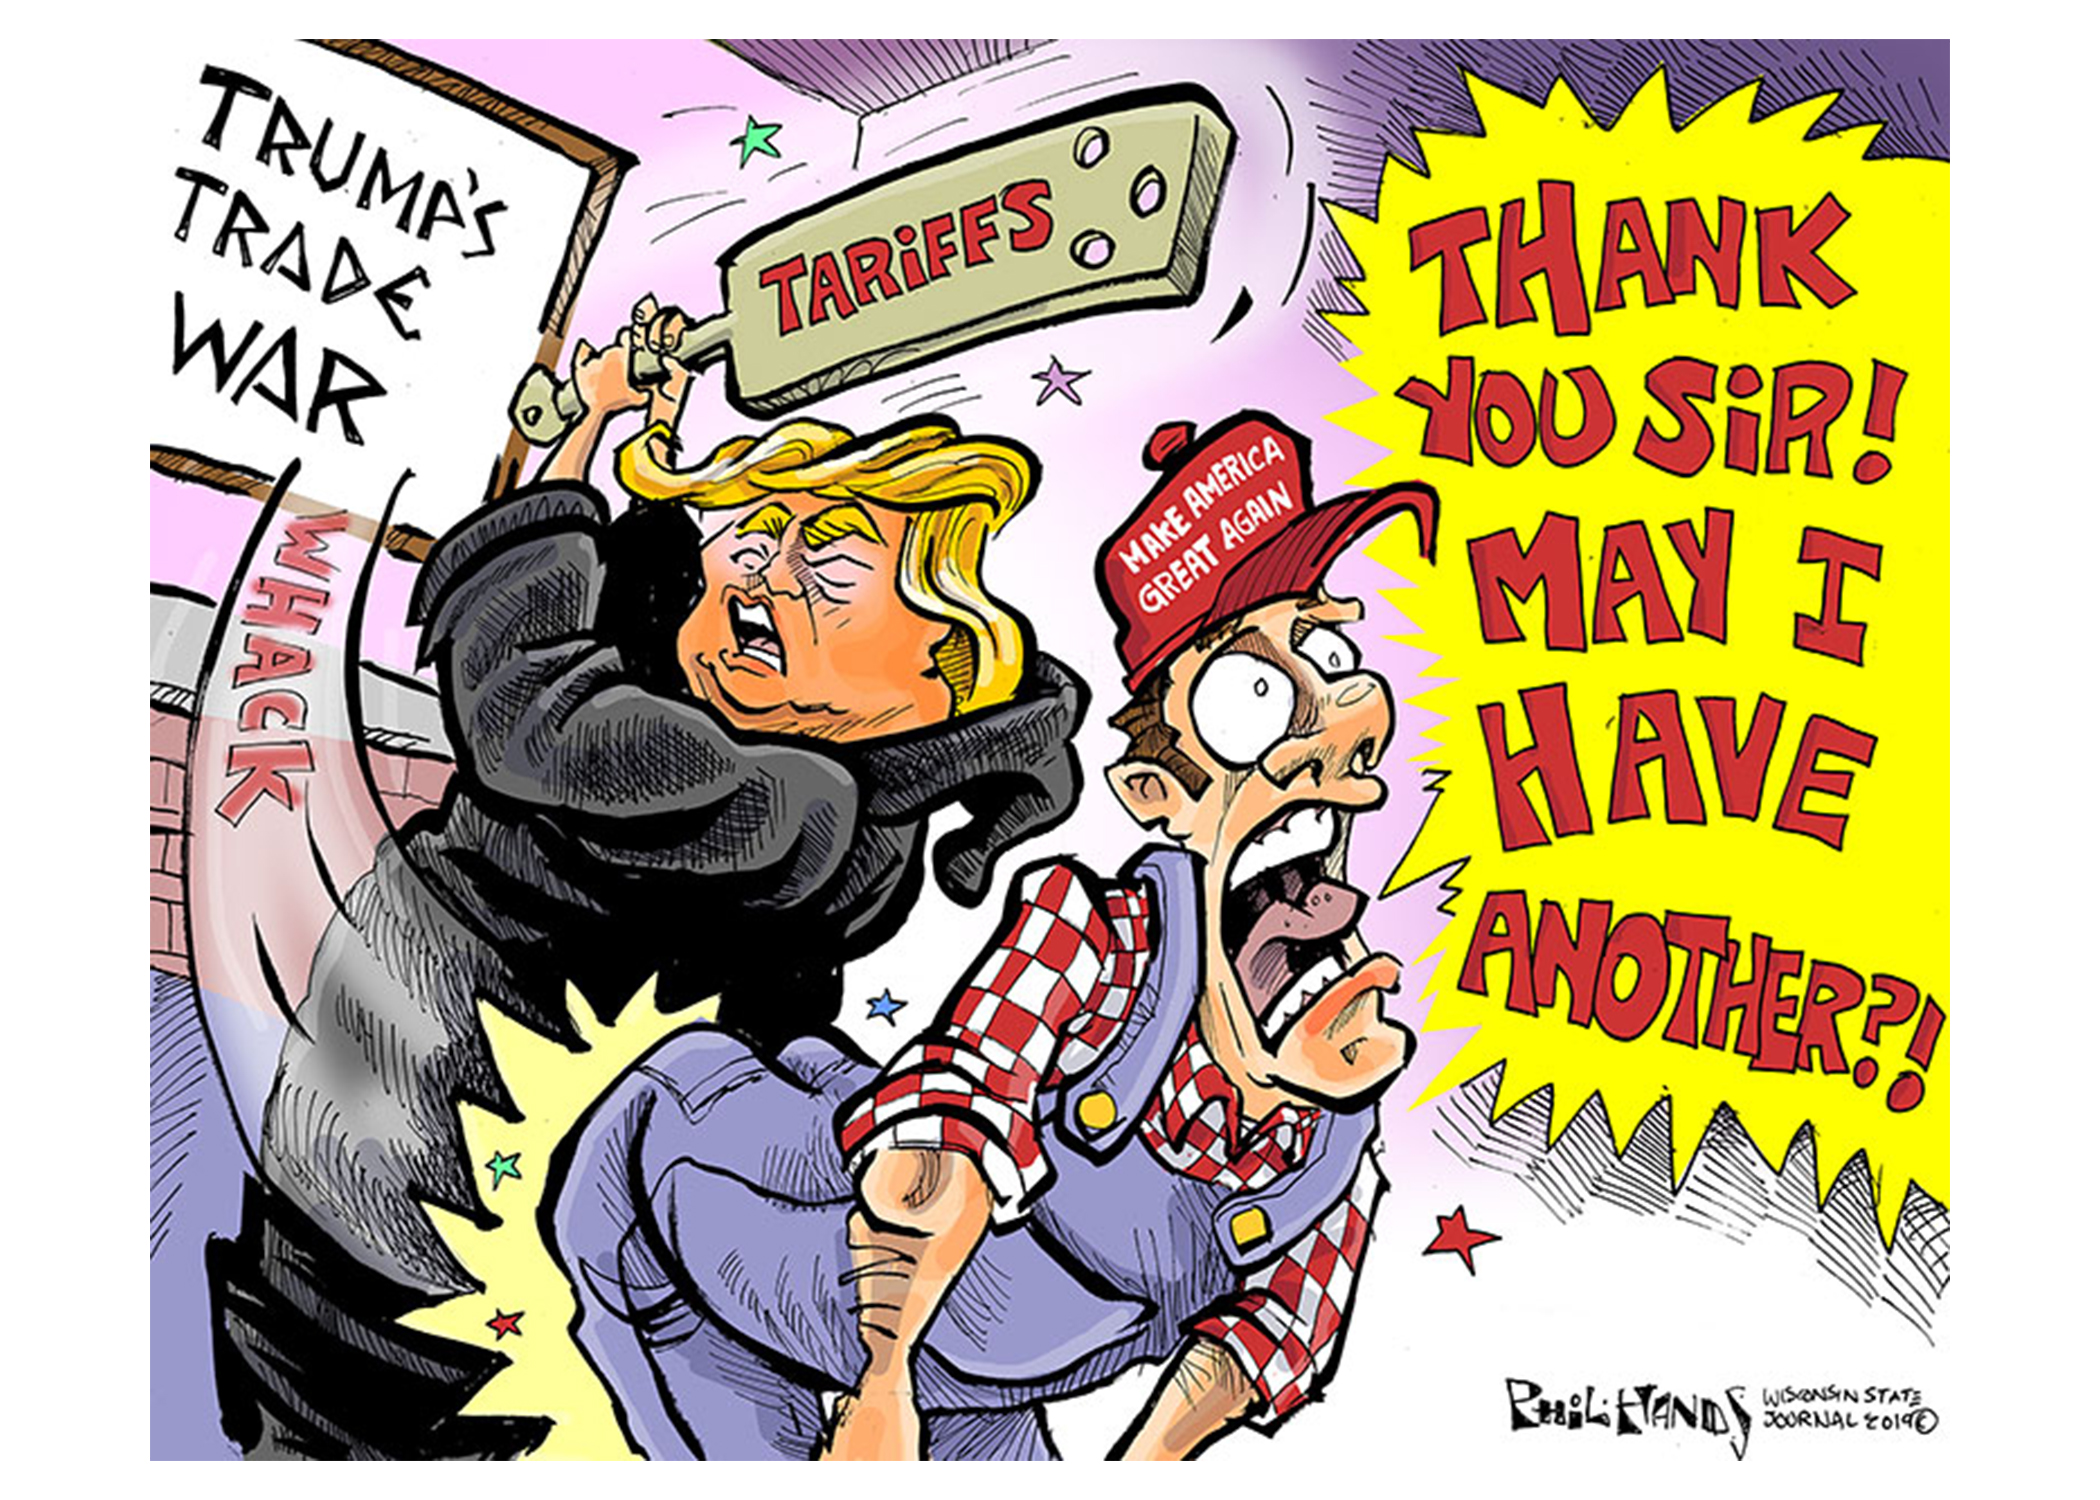 A political cartoon by Phil Hands